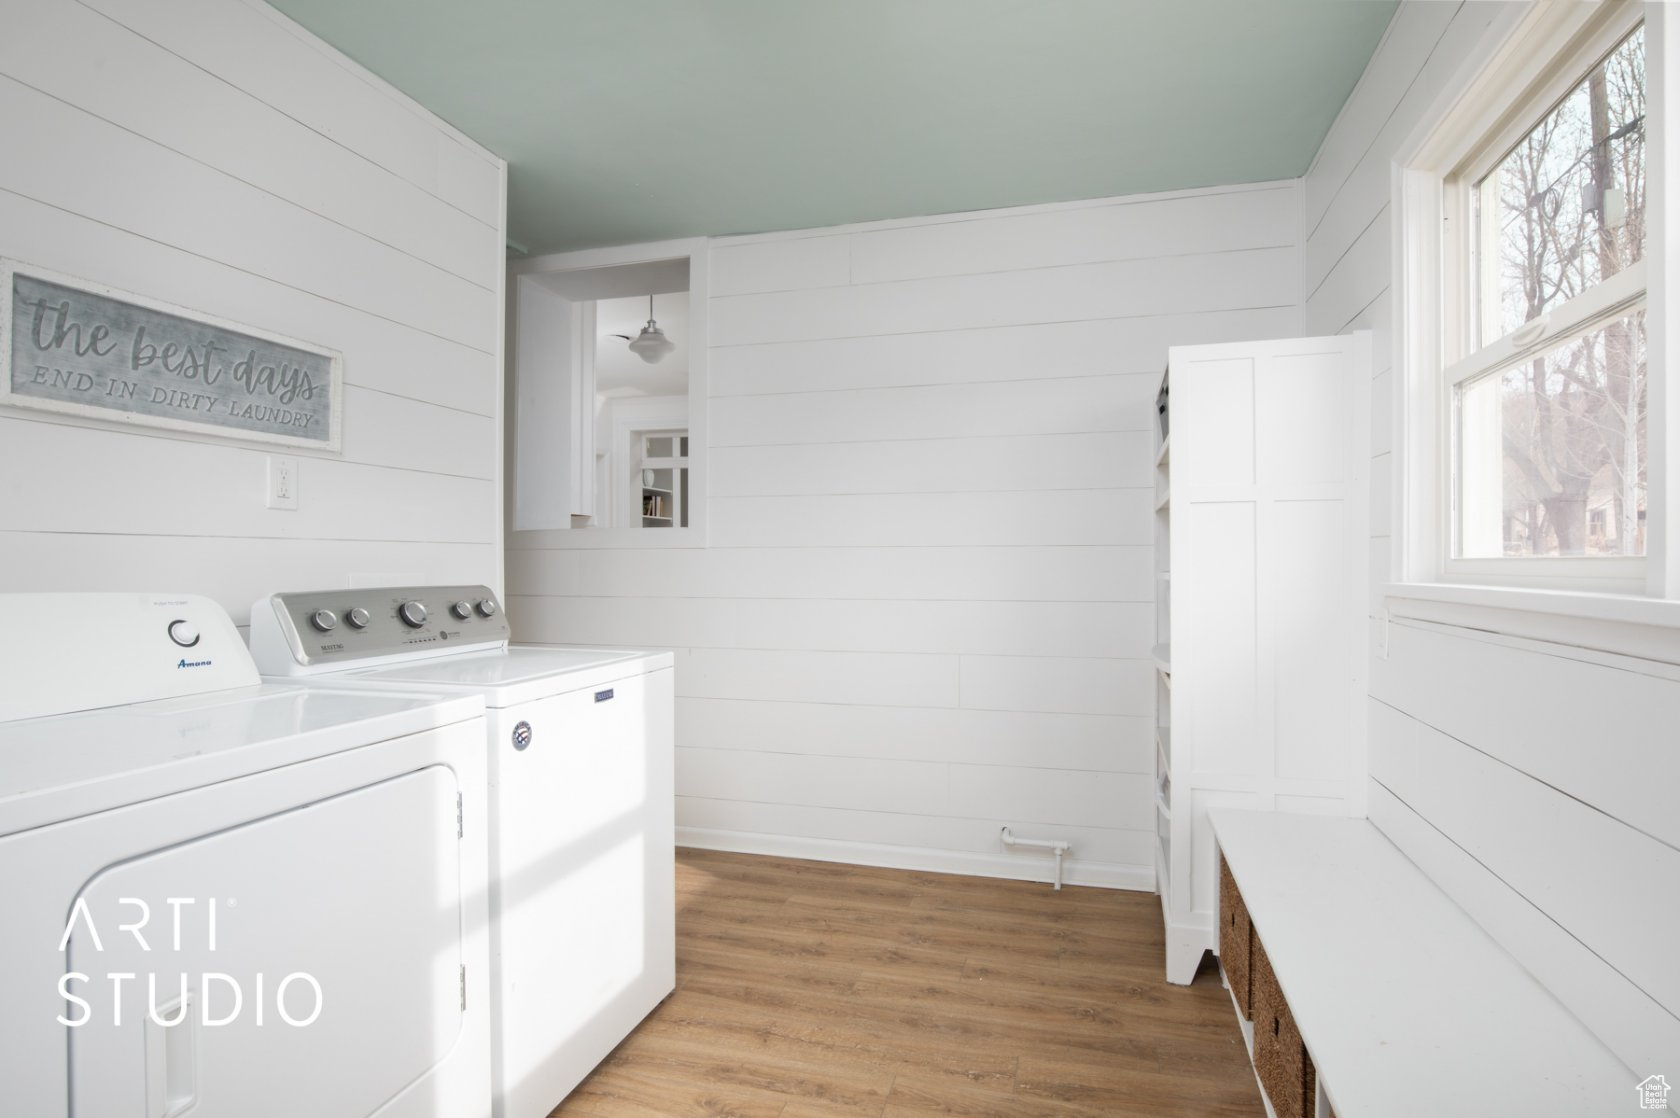 Washroom with shiplap walls, light hardwood / wood-style floors, and washing machine and dryer